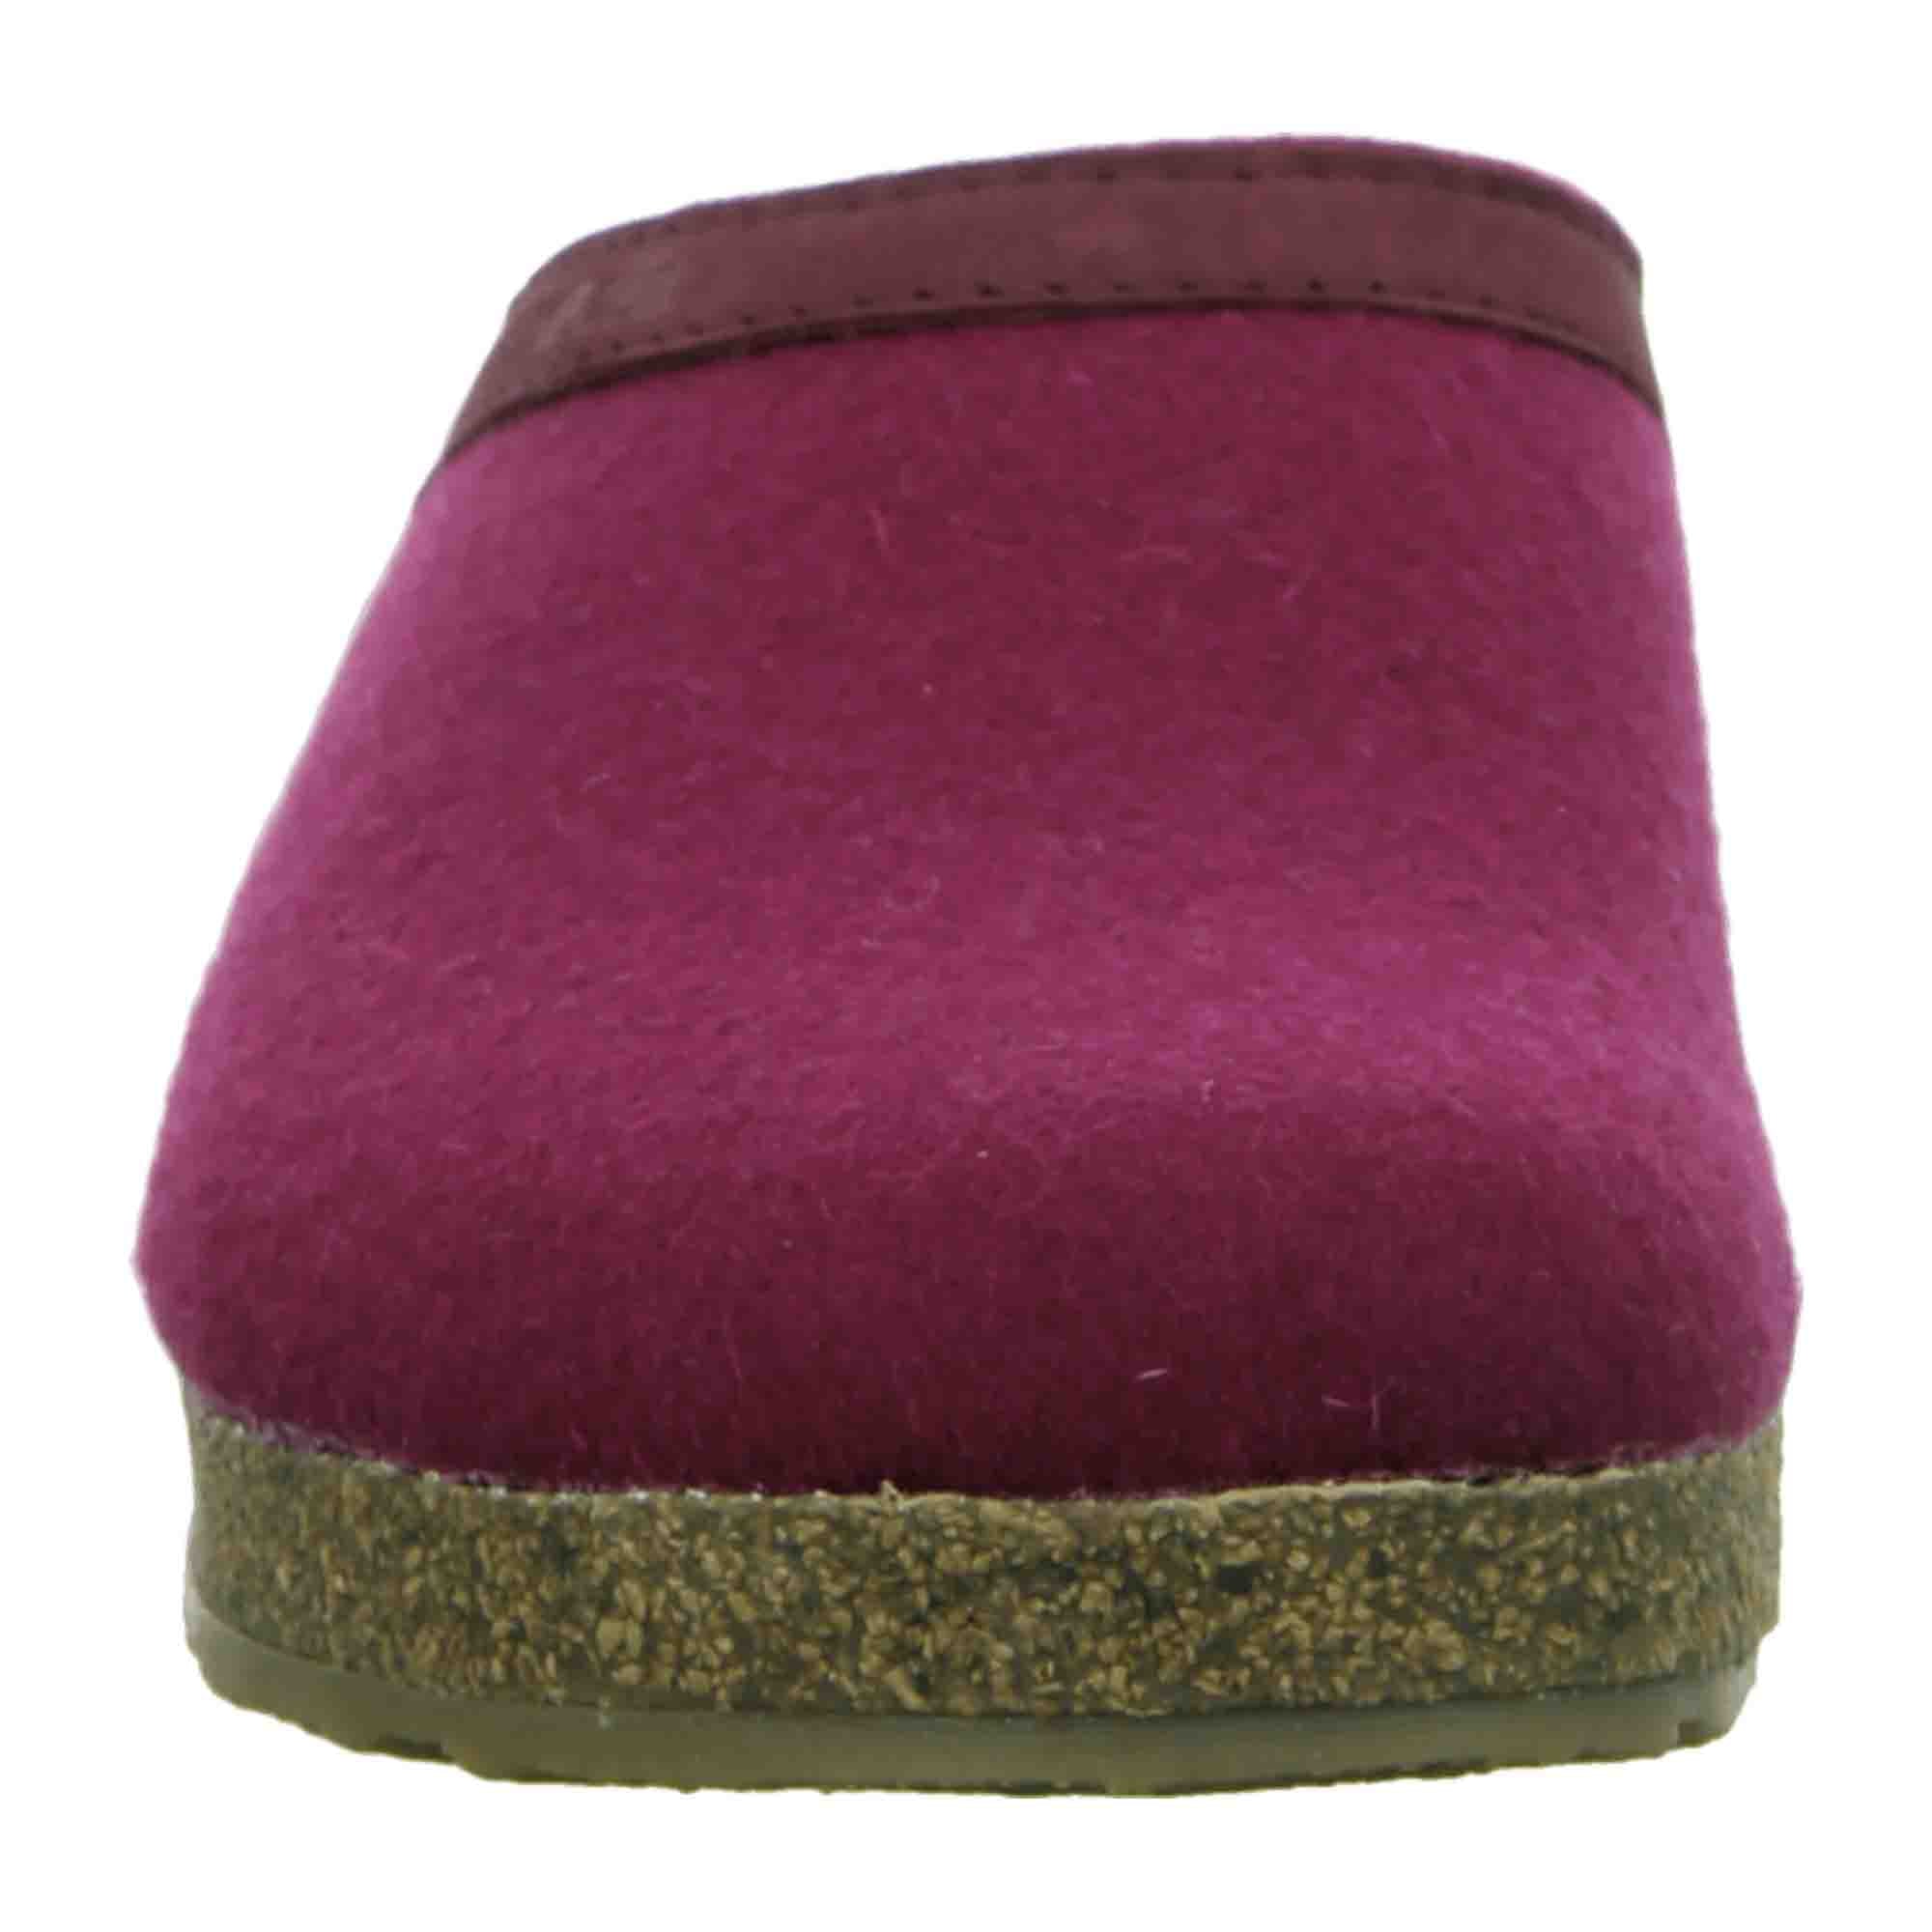 Haflinger Grizzly Torben Women's Clogs, Vibrant Pink - Comfortable & Durable